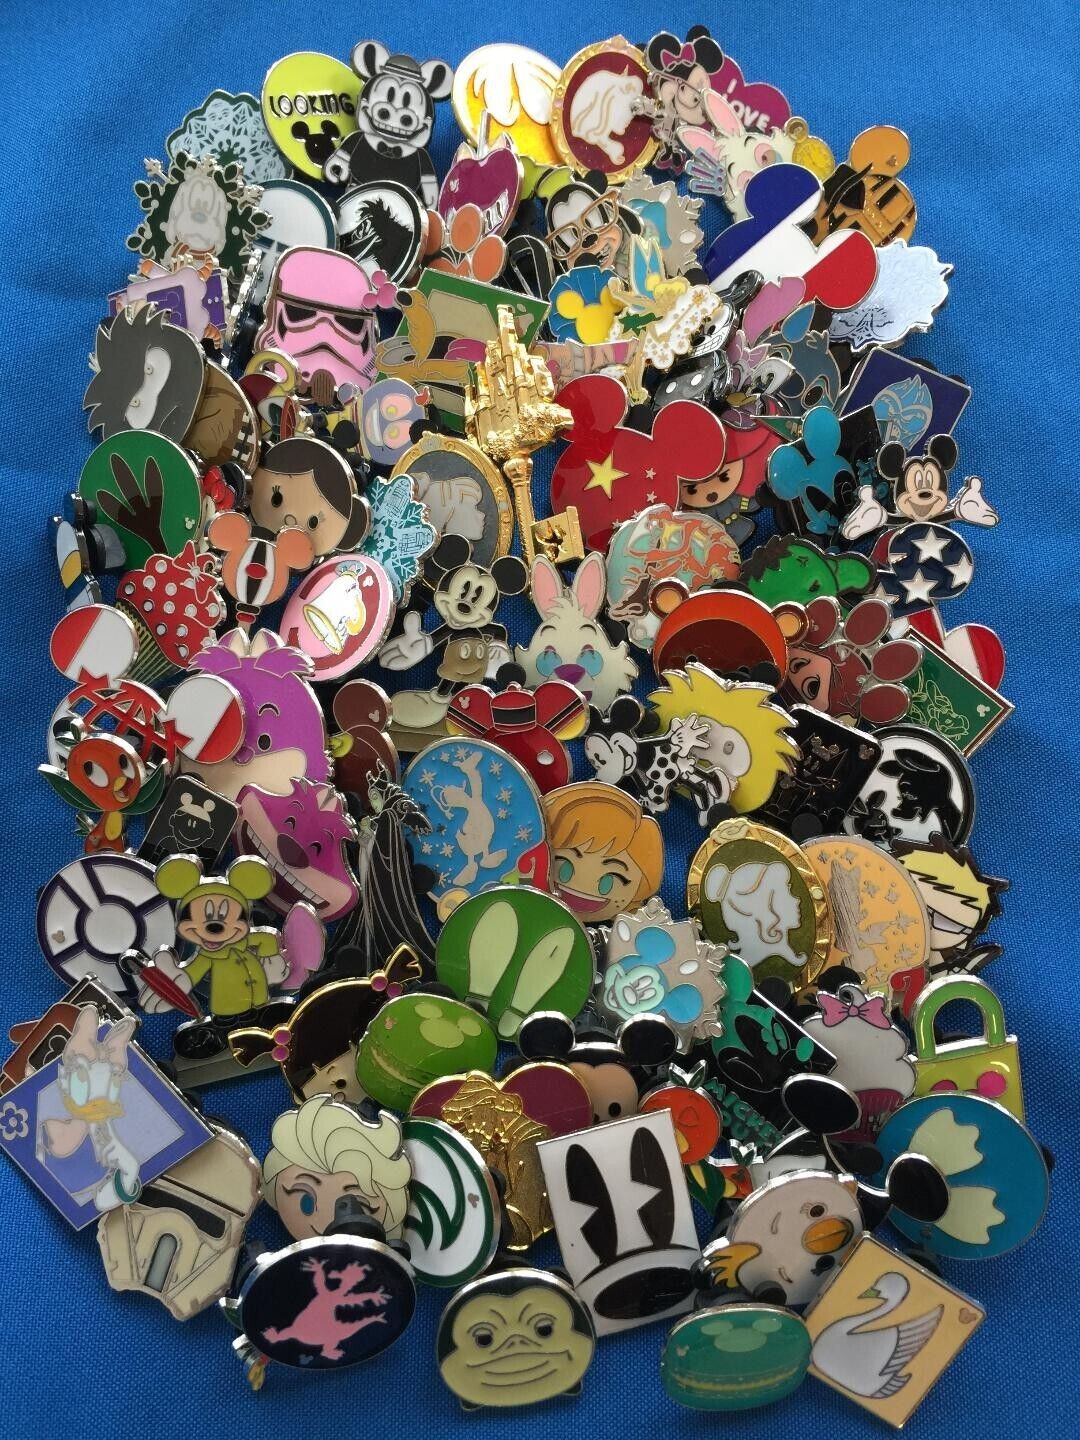 Disney Pins Trading 50 Assorted Vacation Pin Lot - New - No Duplicates Tradable